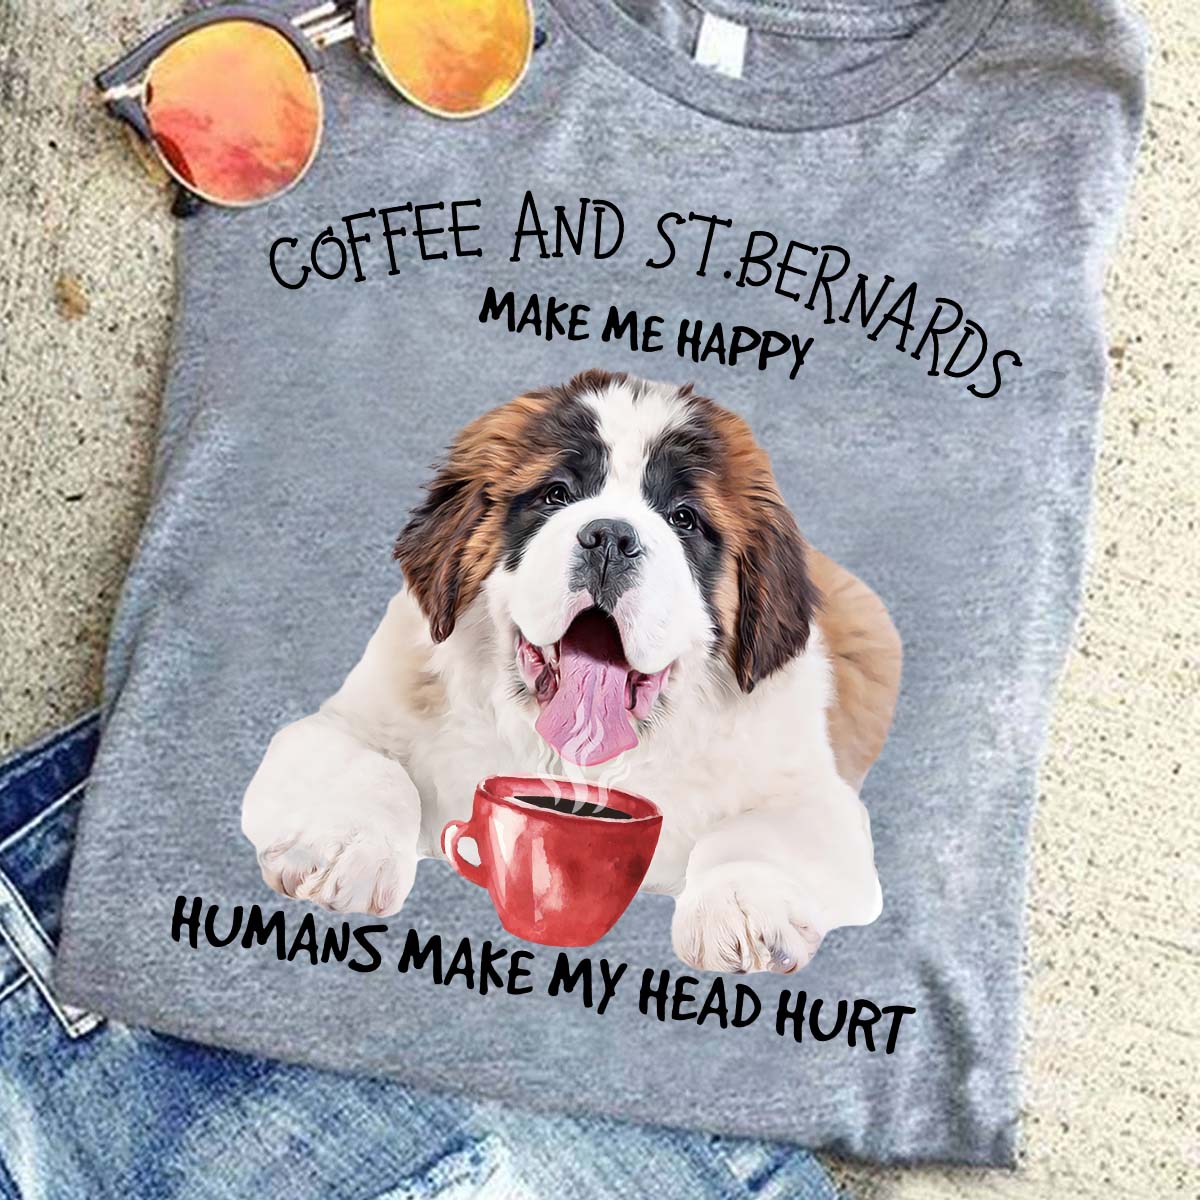 Coffee and St. Bernards make me happy humans make my head hurt